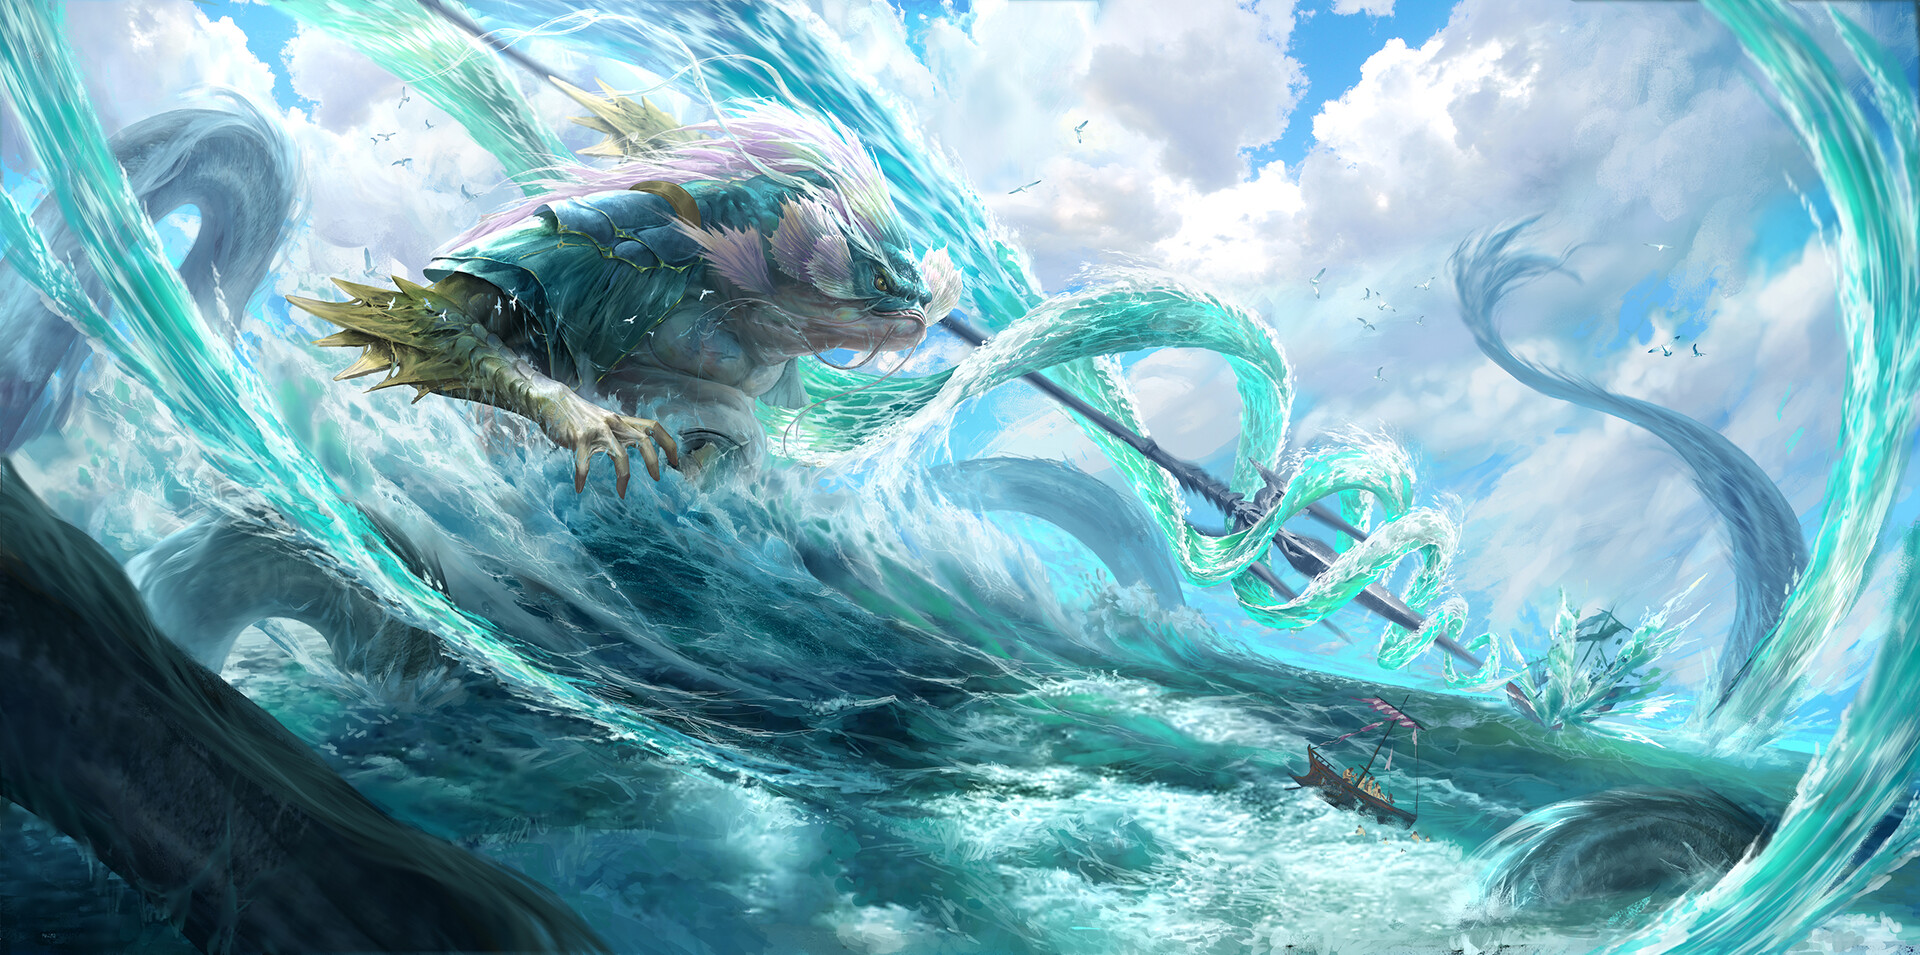 Fantasy Art Artwork Sea Monsters Creature 1920x955